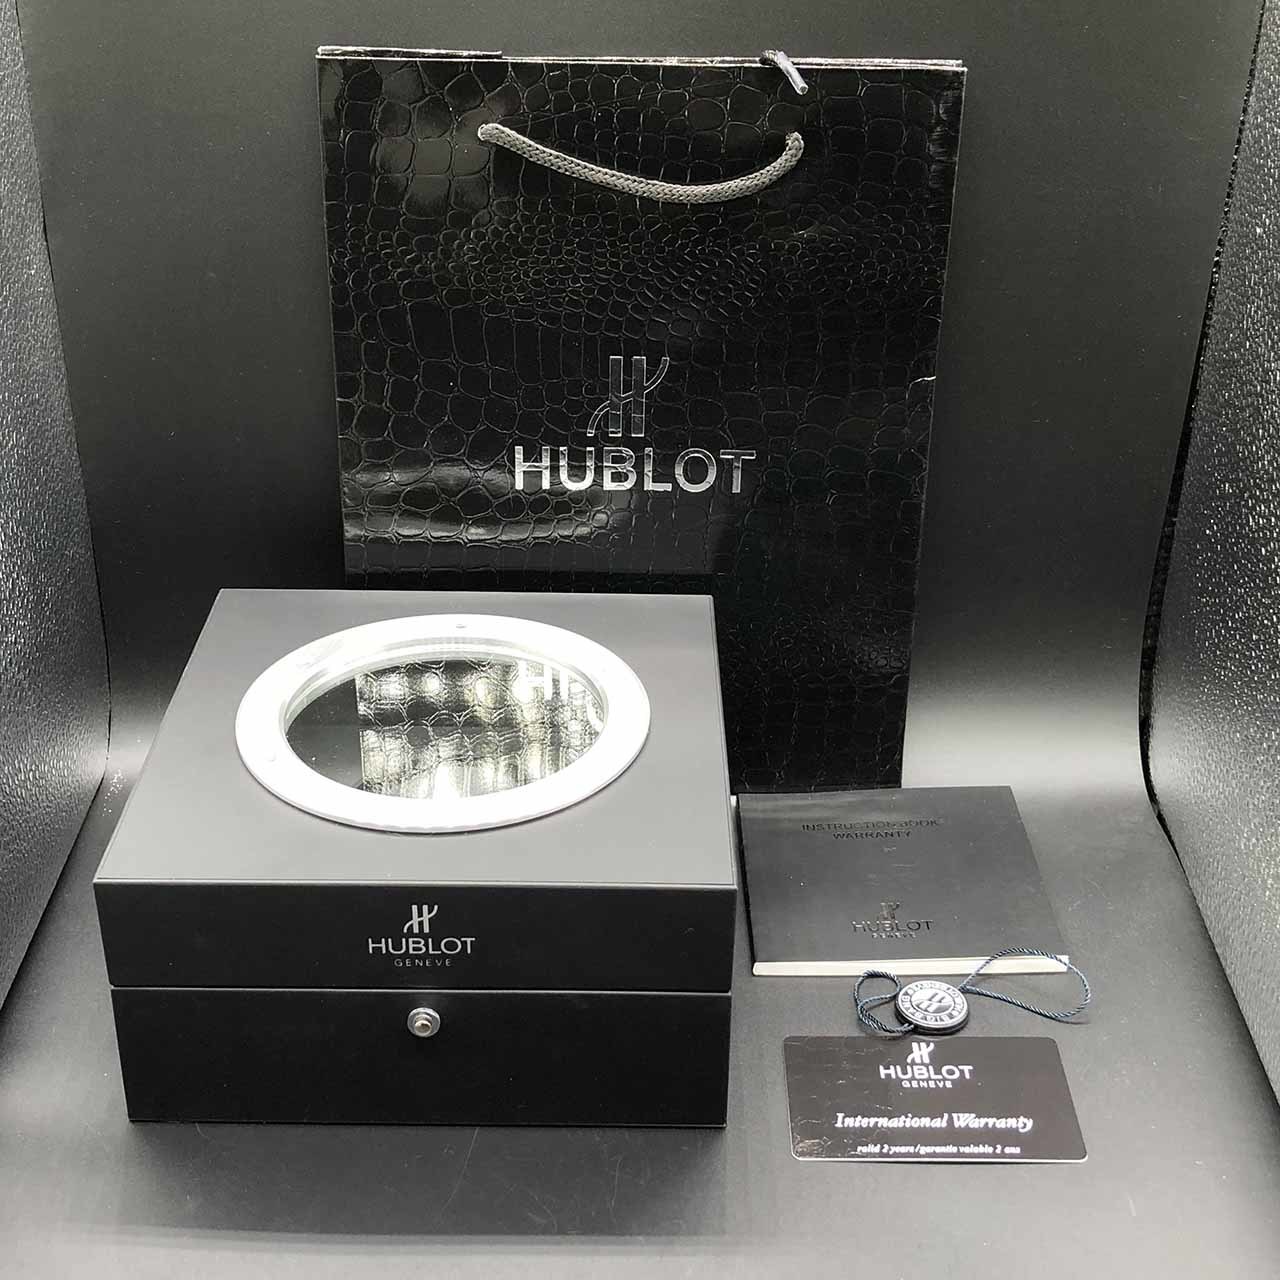 New HUBLOT Black Watch Box Genuine Leather Wooden Case Chest Full Set VIP Gift ♚